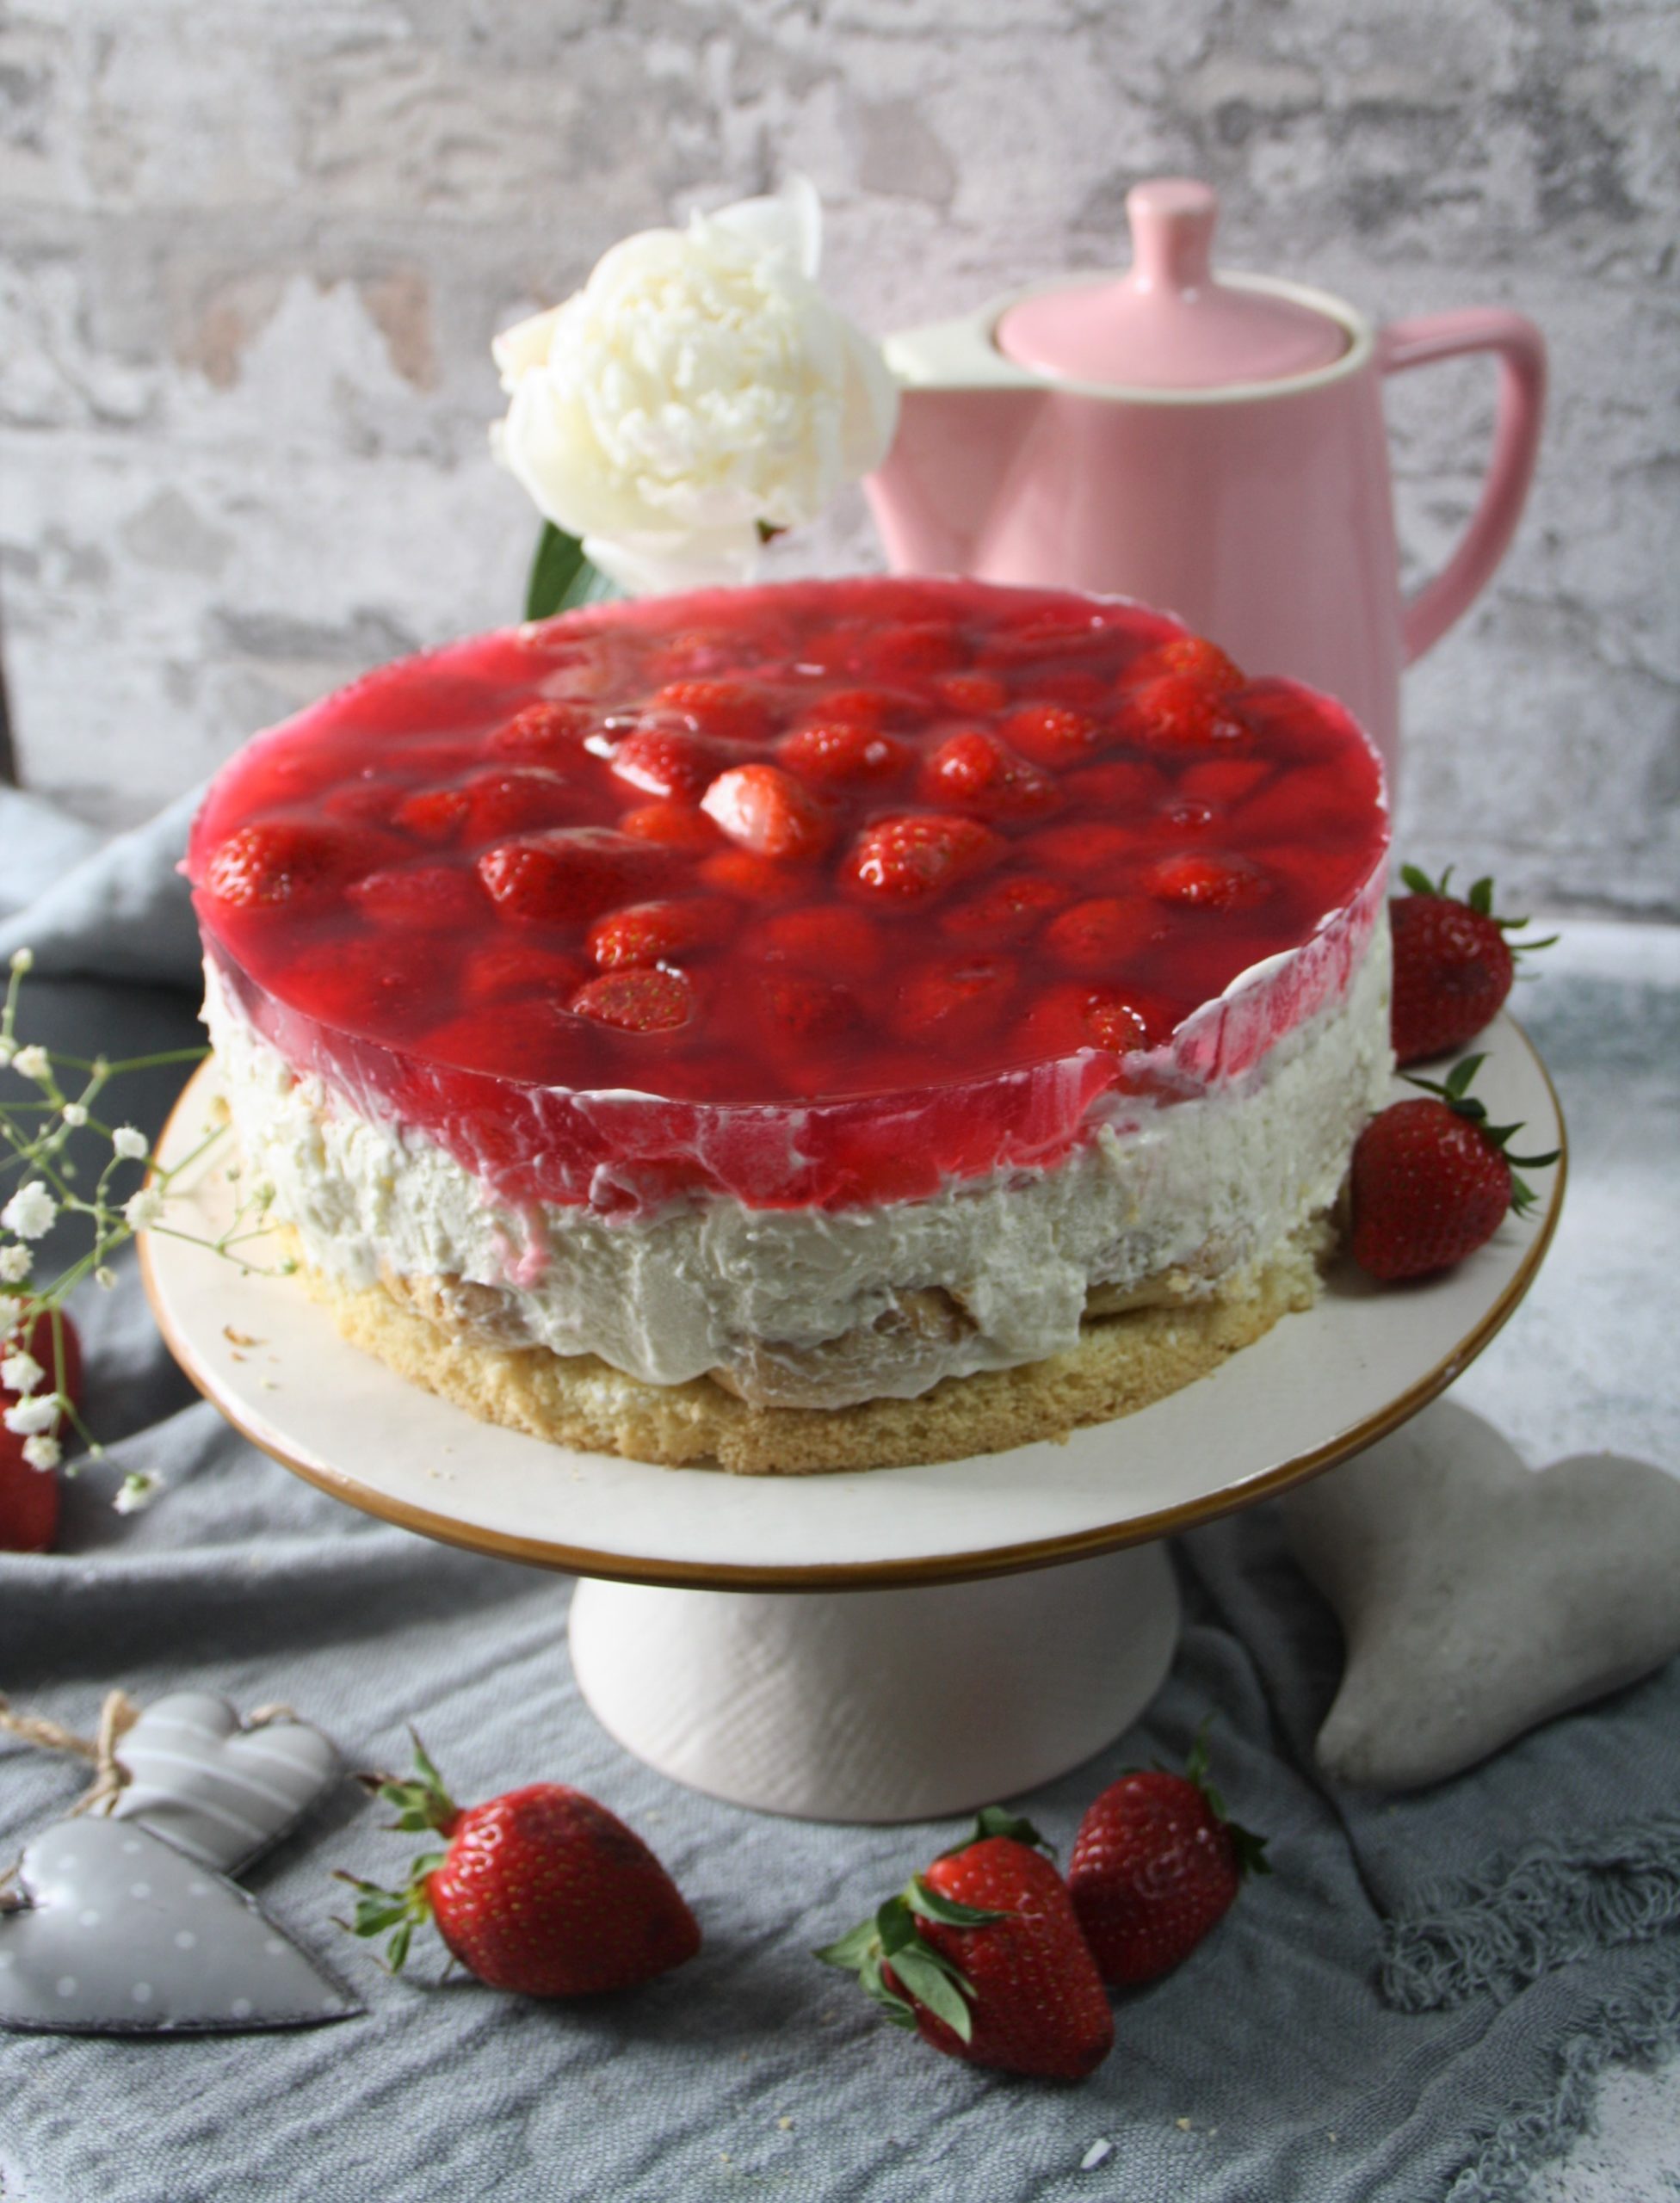 Windbeutel-Torte mit Erdbeeren - Genusswerke